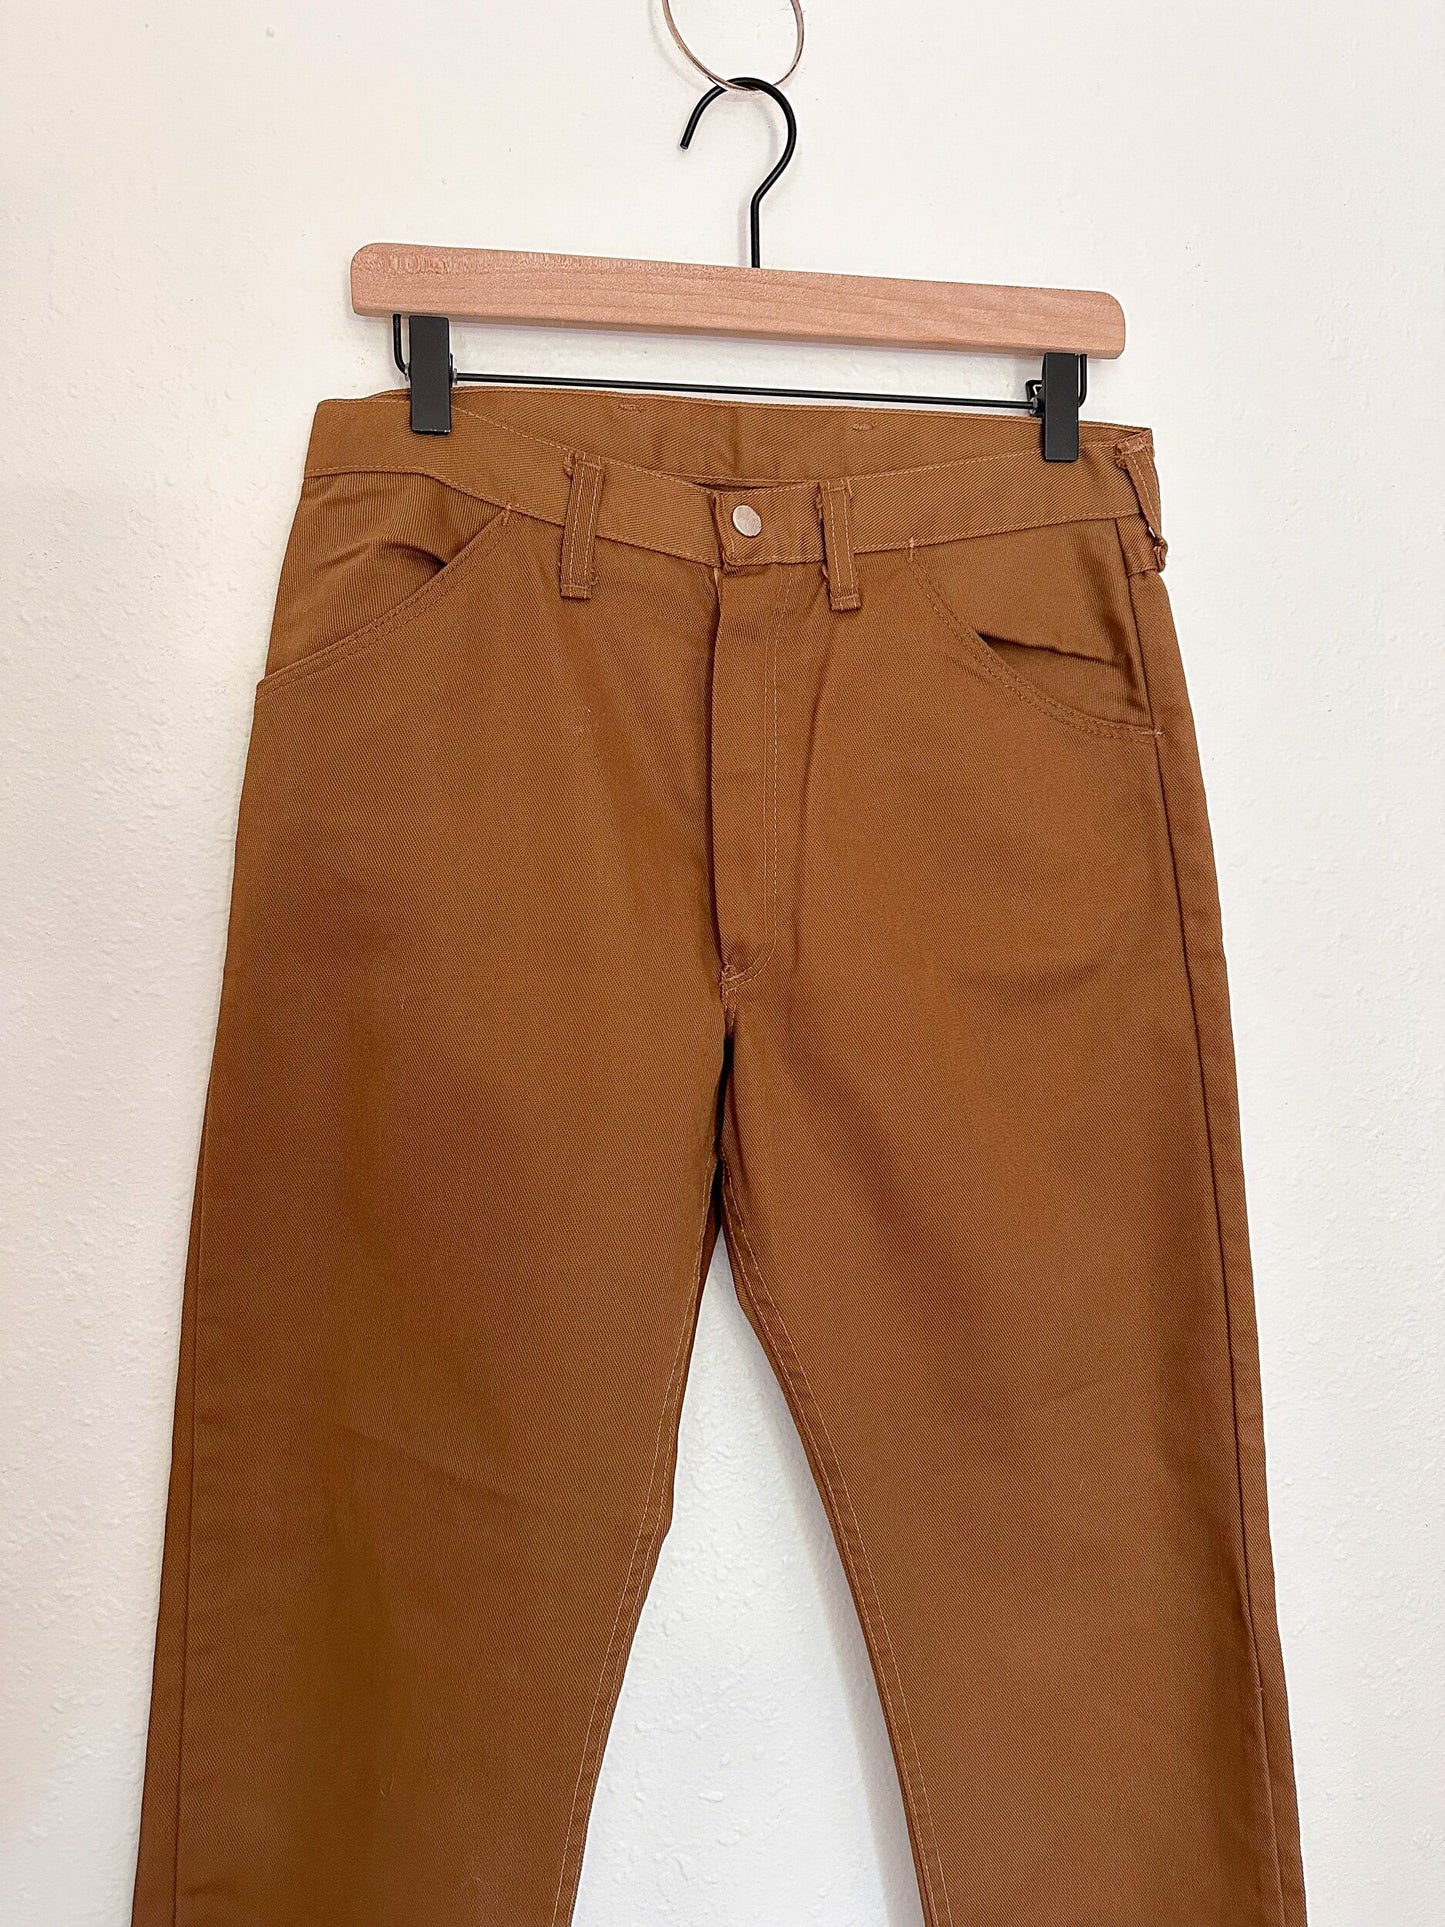 vintage brown sanforized jeans